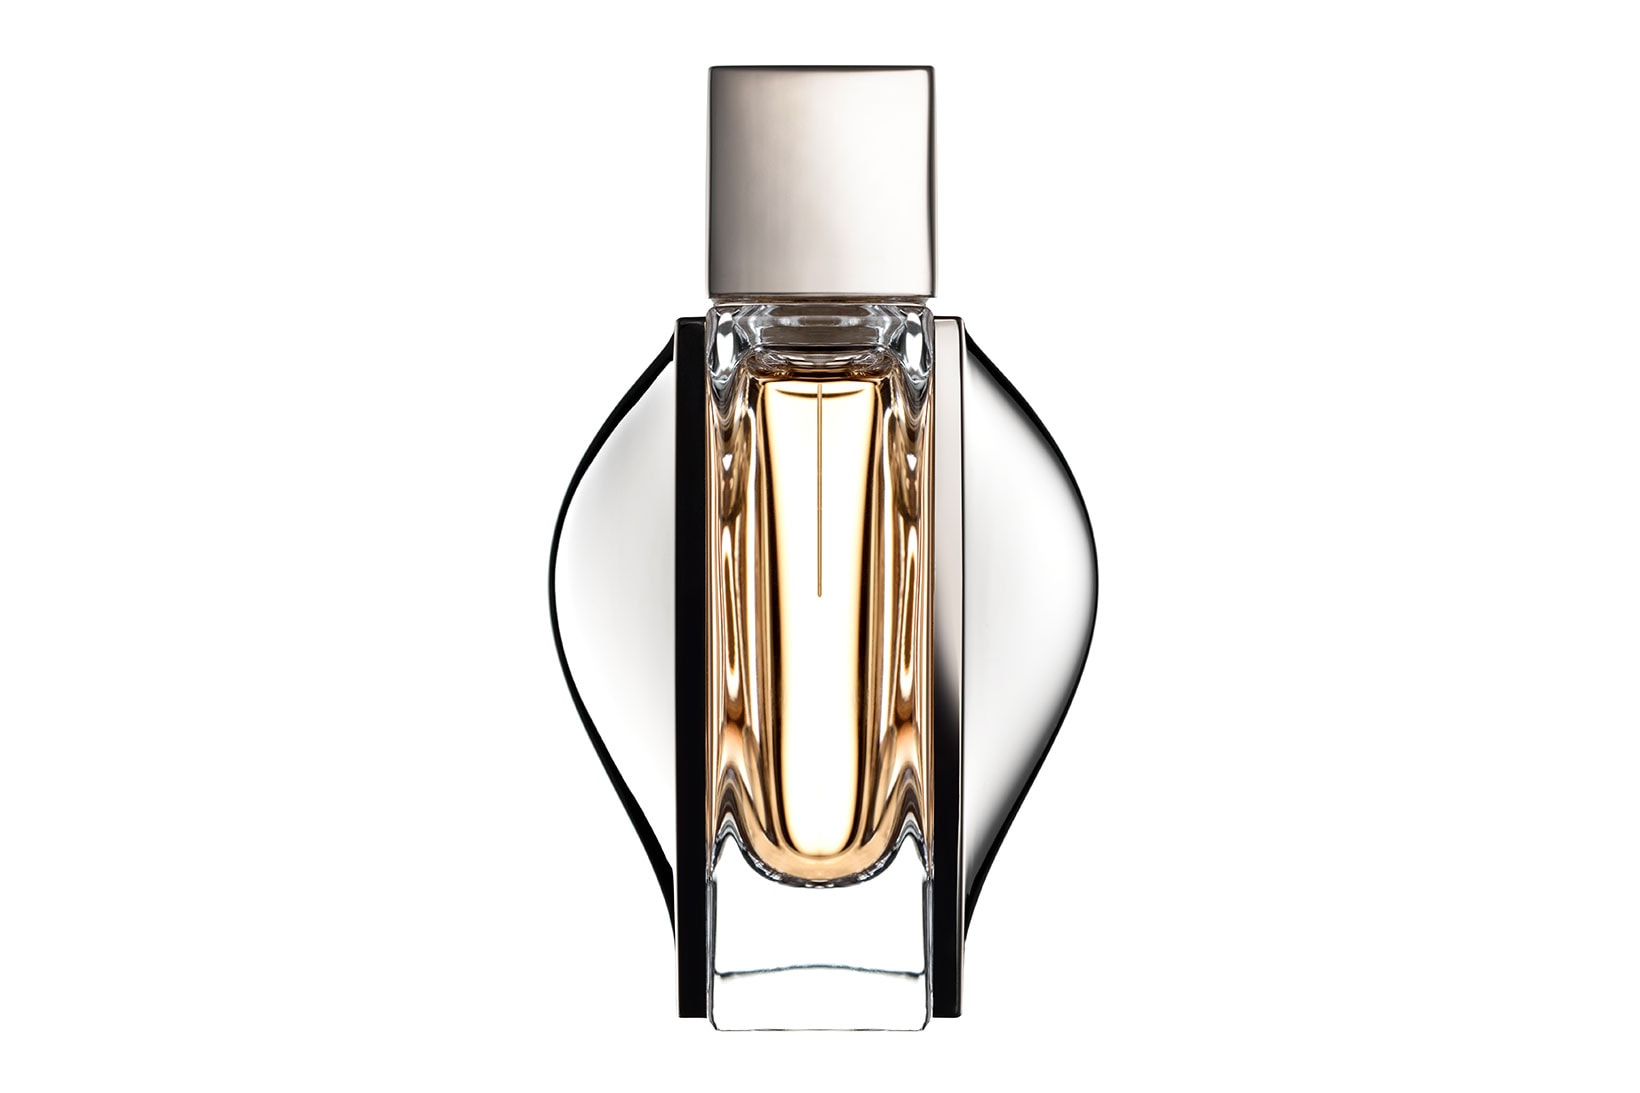 mikimoto first perfume fragrance launch gender-neutral sea citrus magnolia jewelry